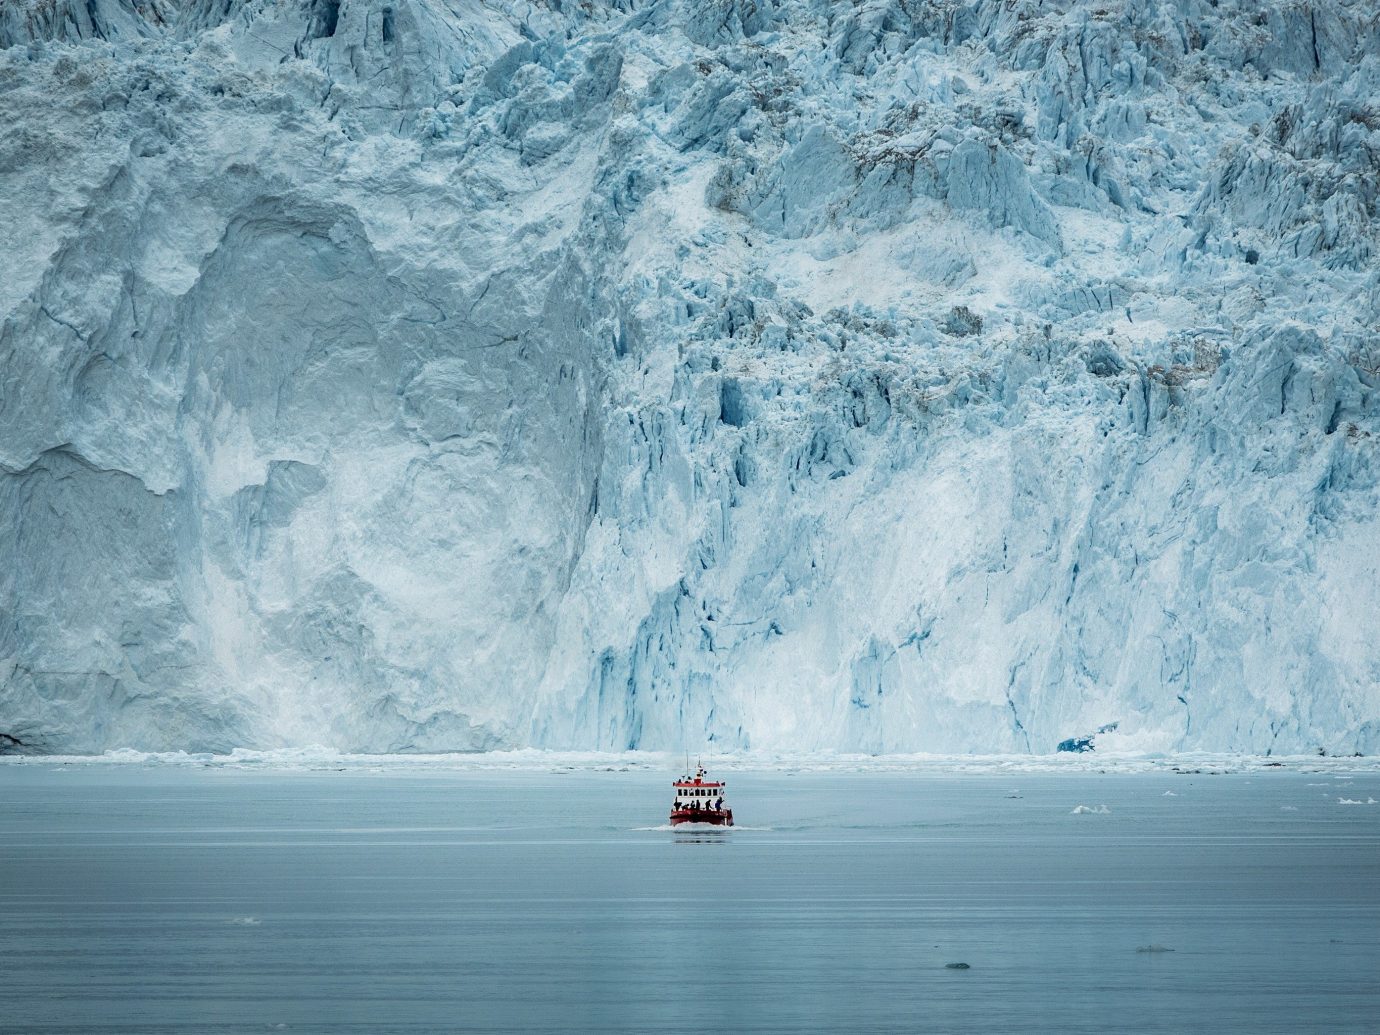 A small passenger boat crosses the Eqip glacier